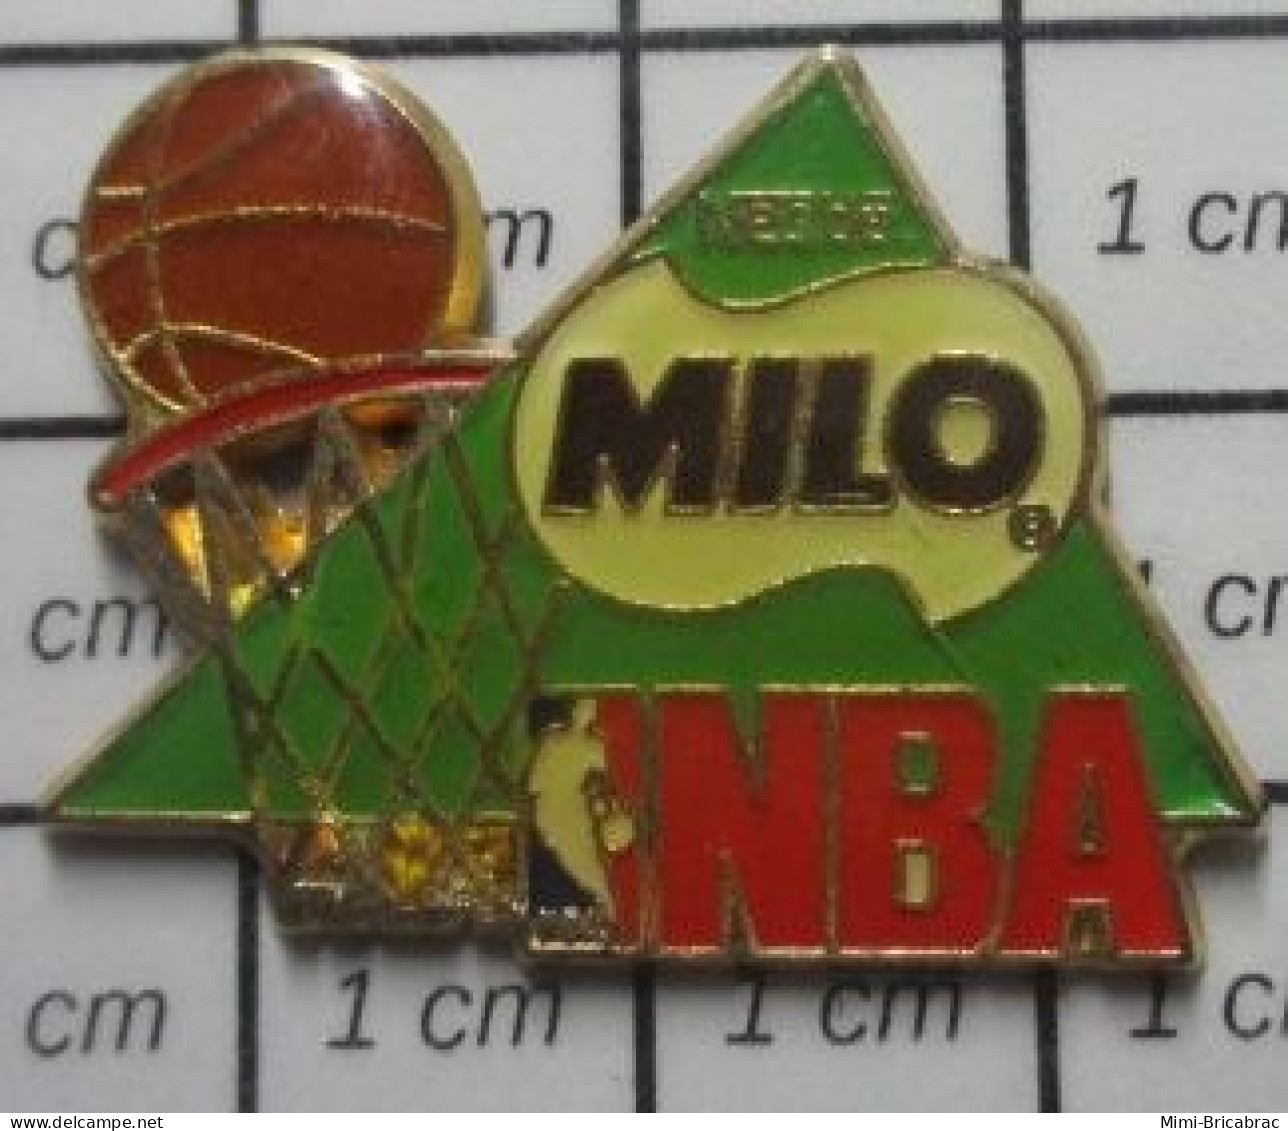 2020  Pin's Pins / Beau Et Rare / THEME : SPORTS / BASKET-BALL USA NBA GLACE MILO Sans Tintin ! - Pallacanestro